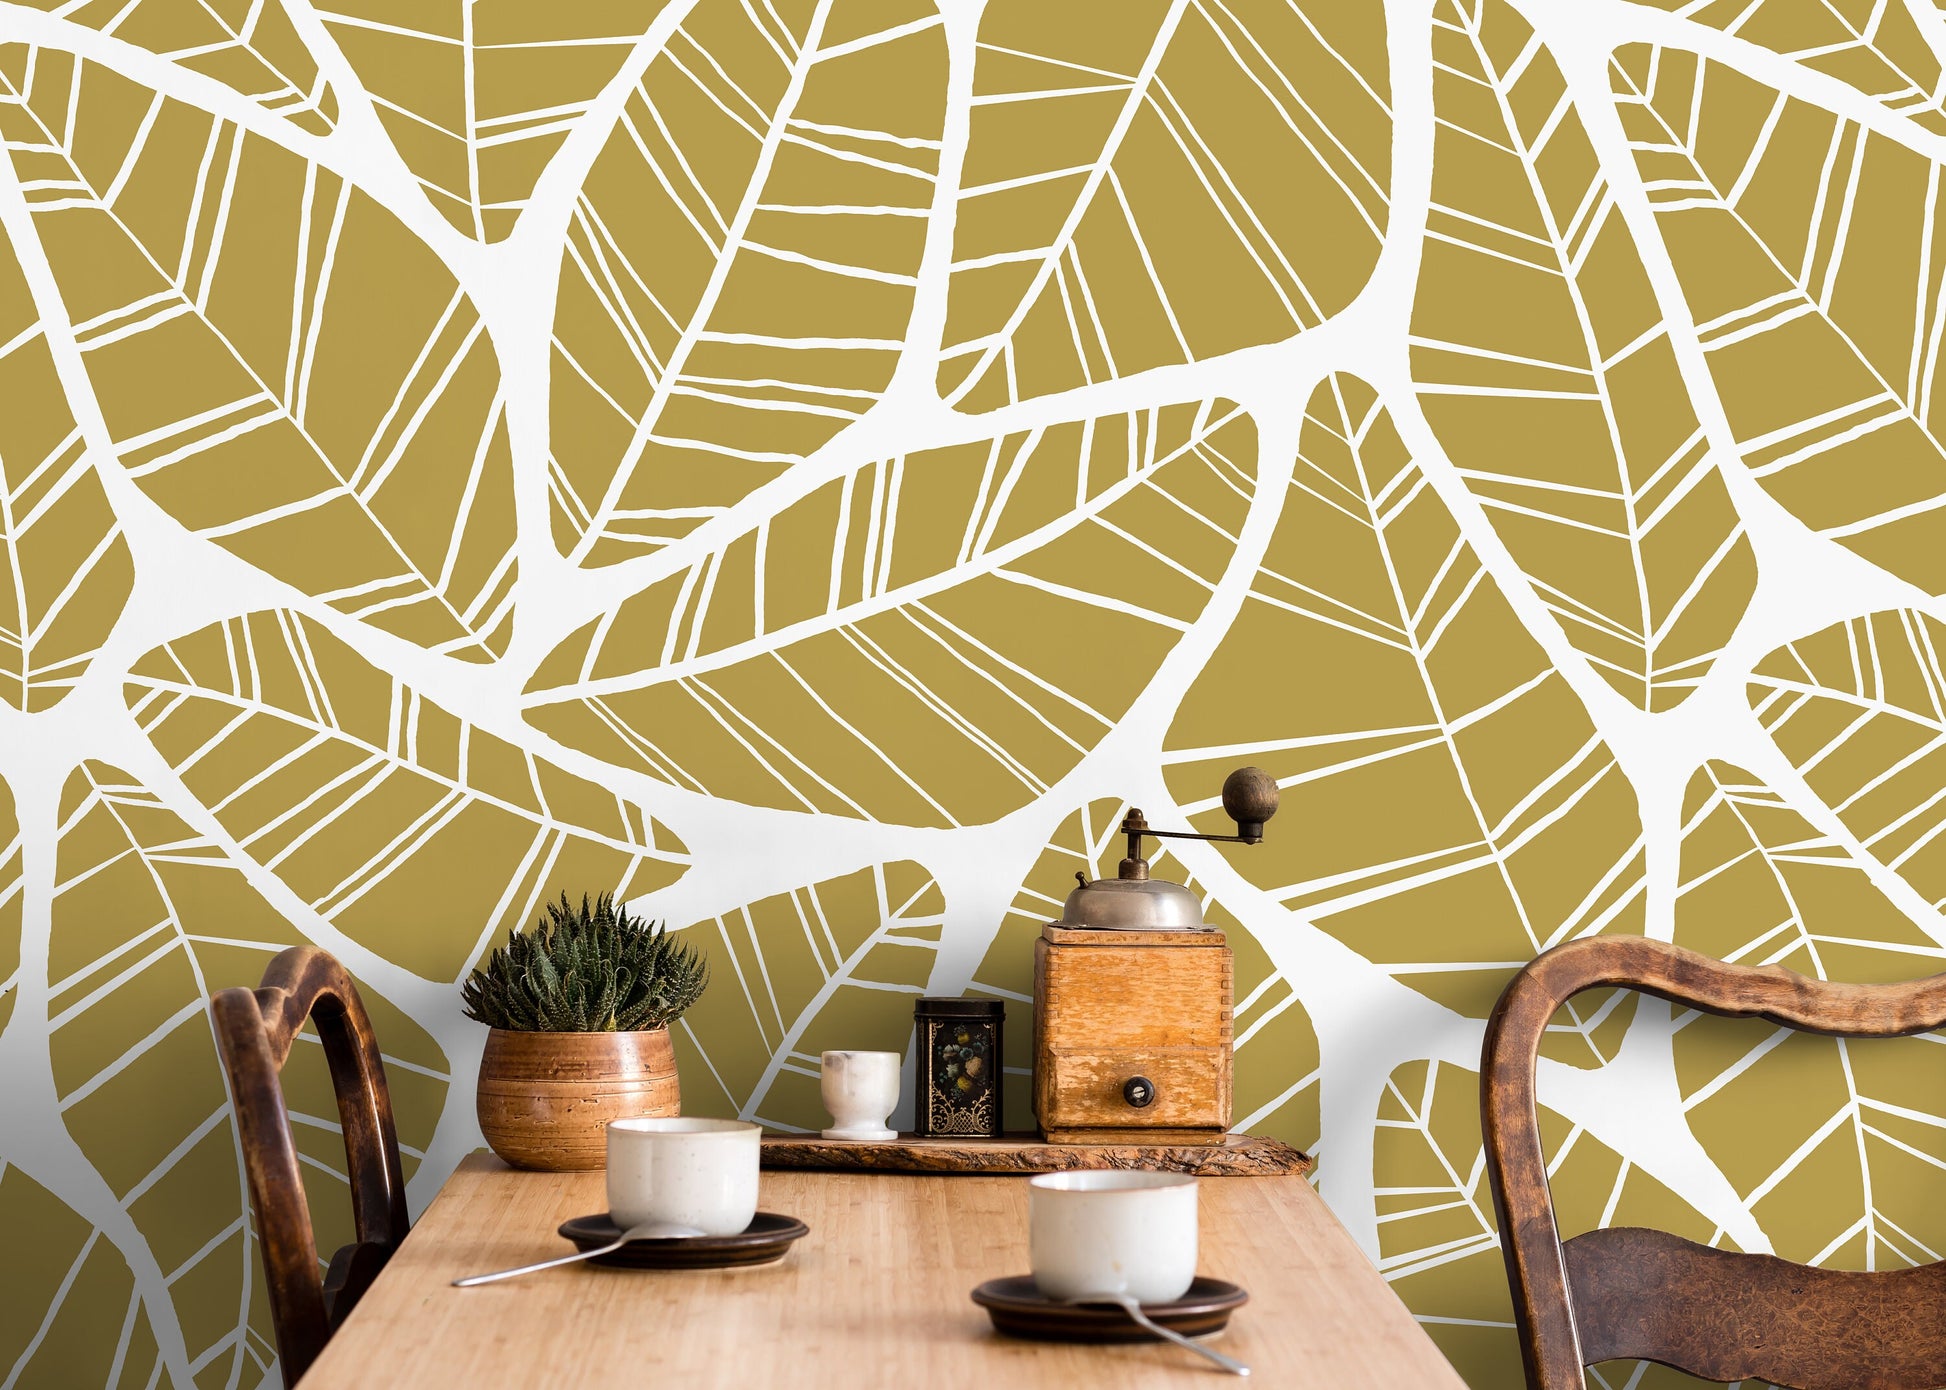 Boho Leaves Wallpaper / Peel and Stick Wallpaper Removable Wallpaper Home Decor Wall Art Wall Decor Room Decor - C619